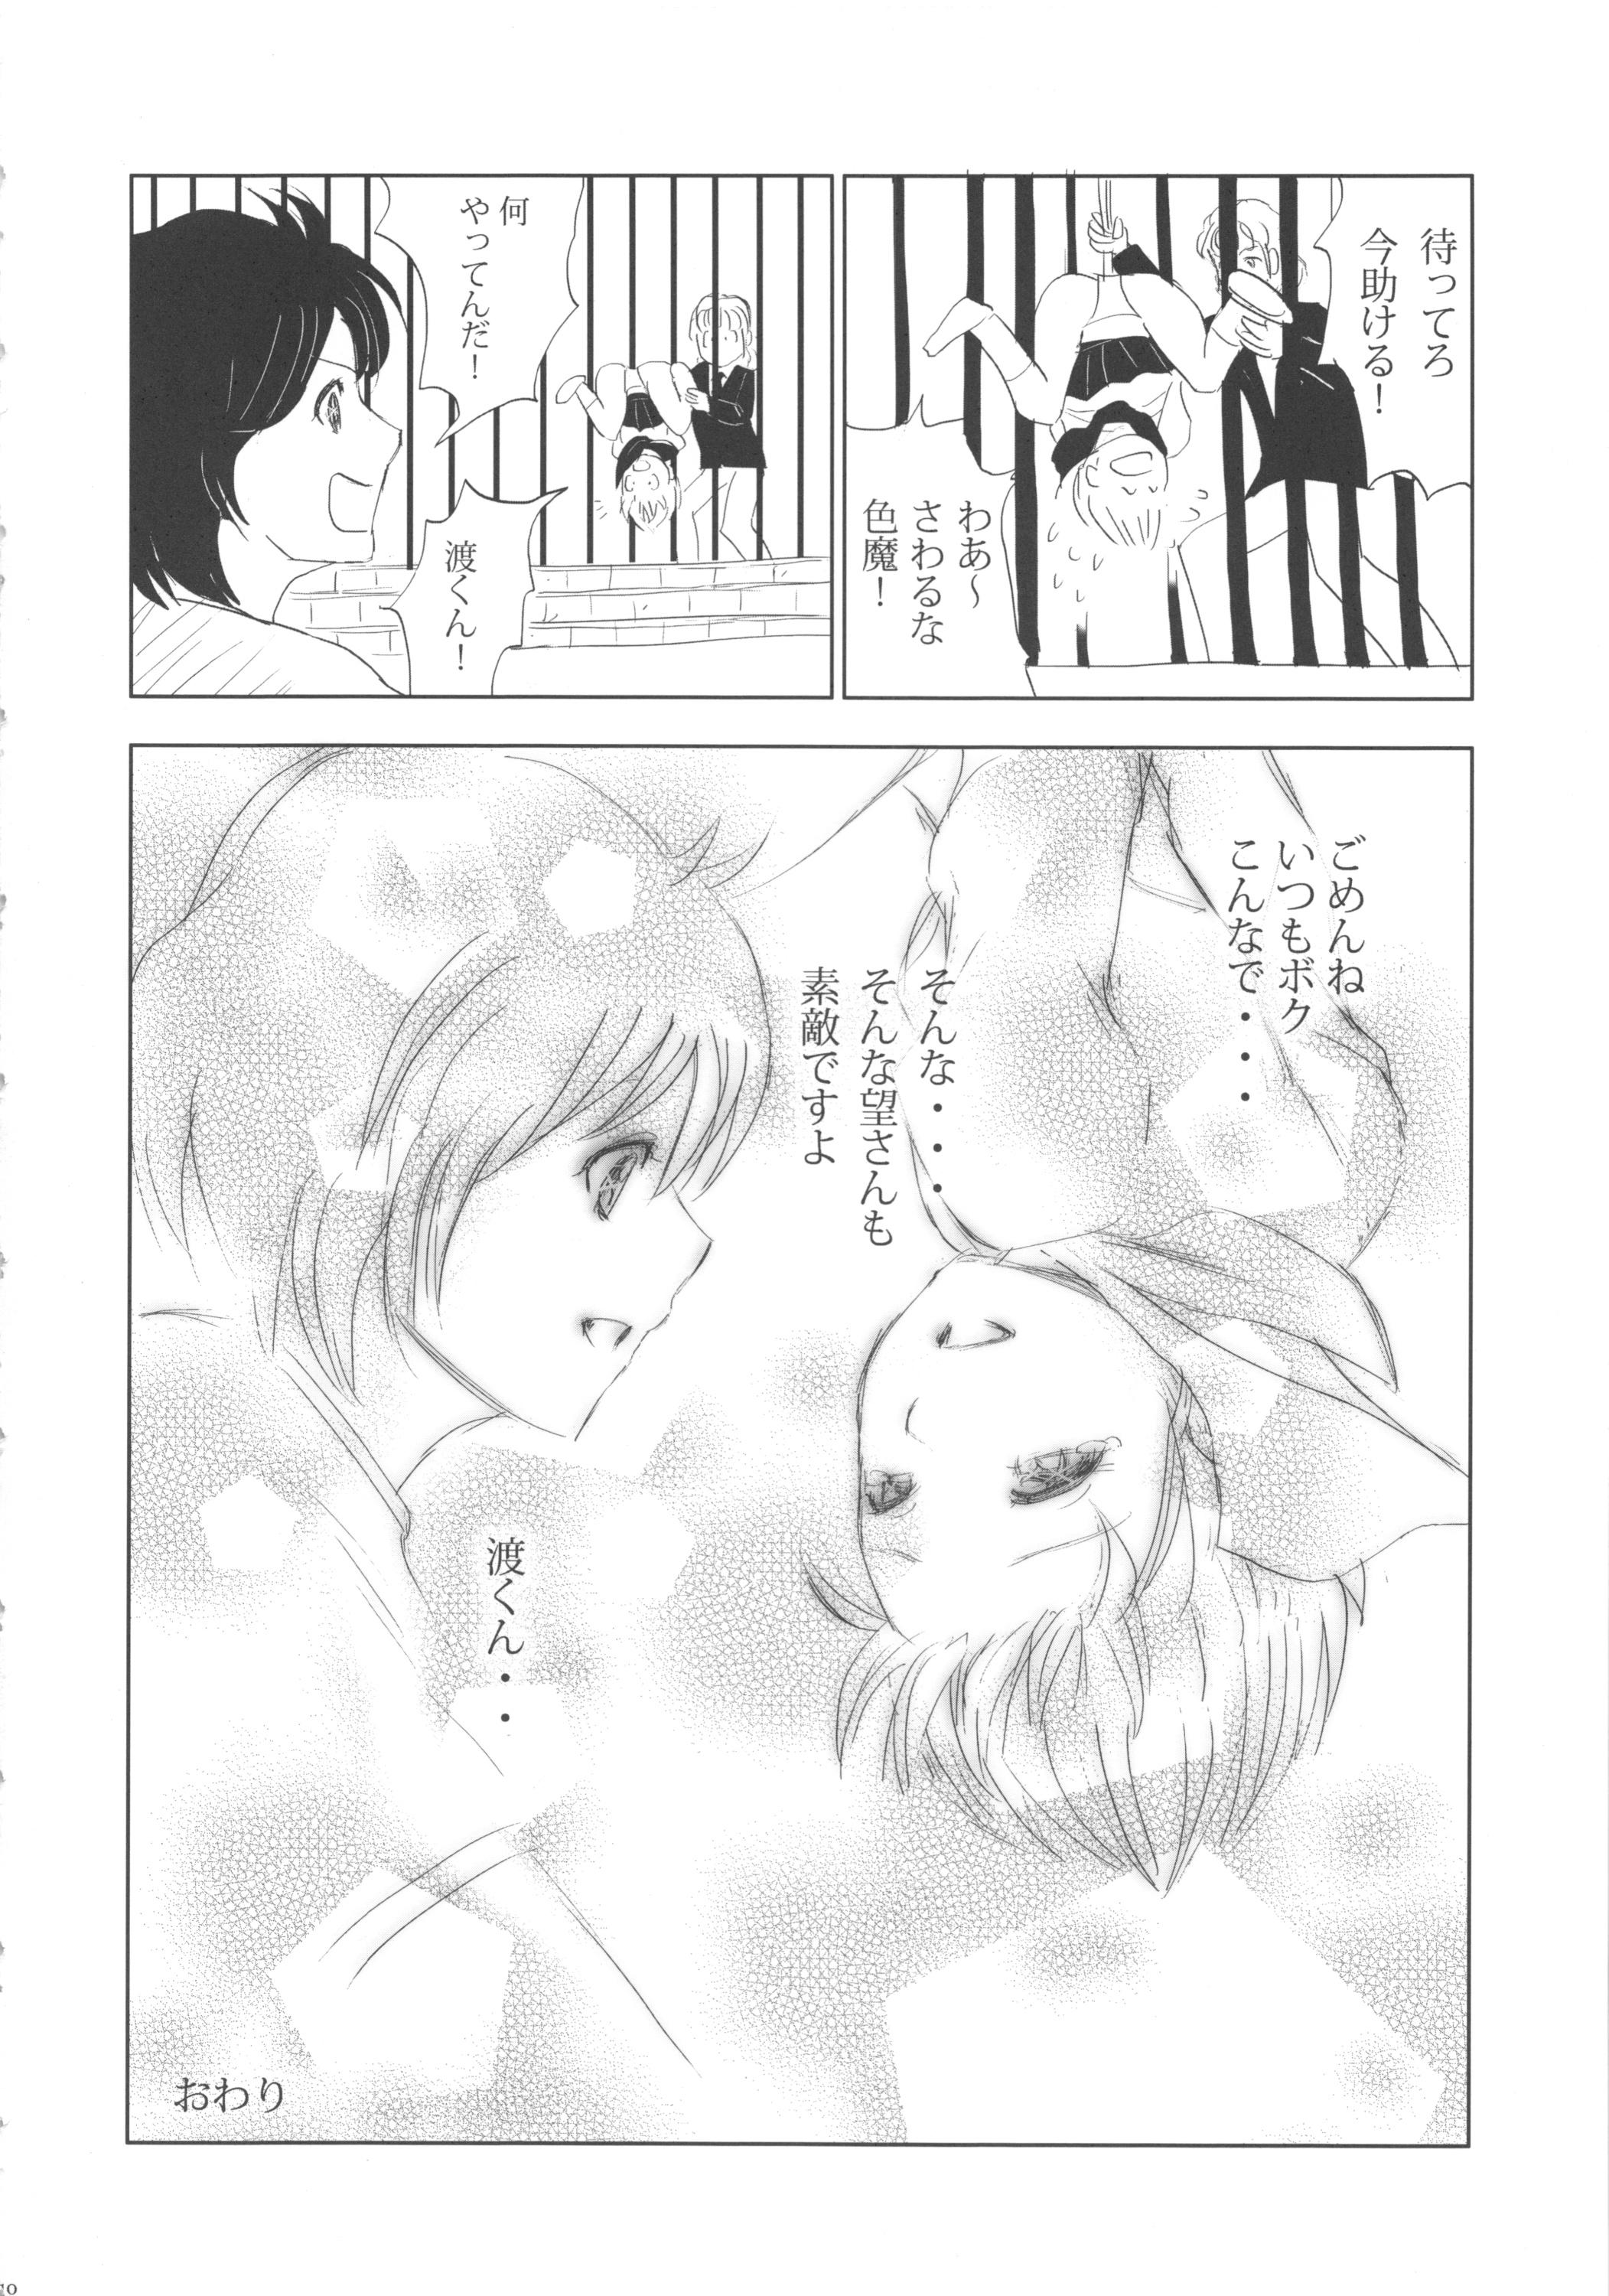 FLOUR Shoujo Manga Graffiti 9